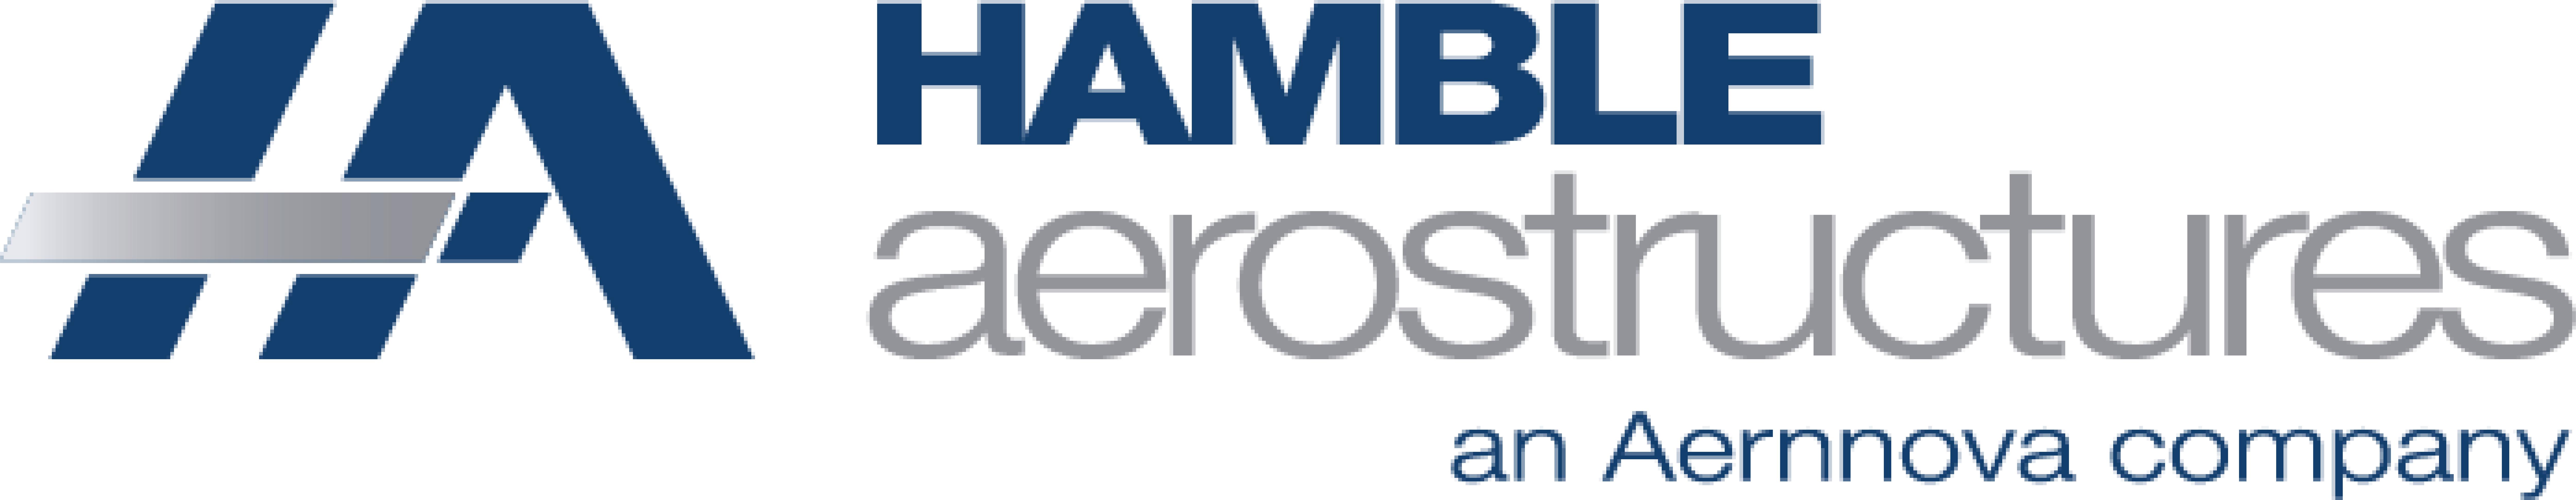 Hamble Aerostructures logo@600x